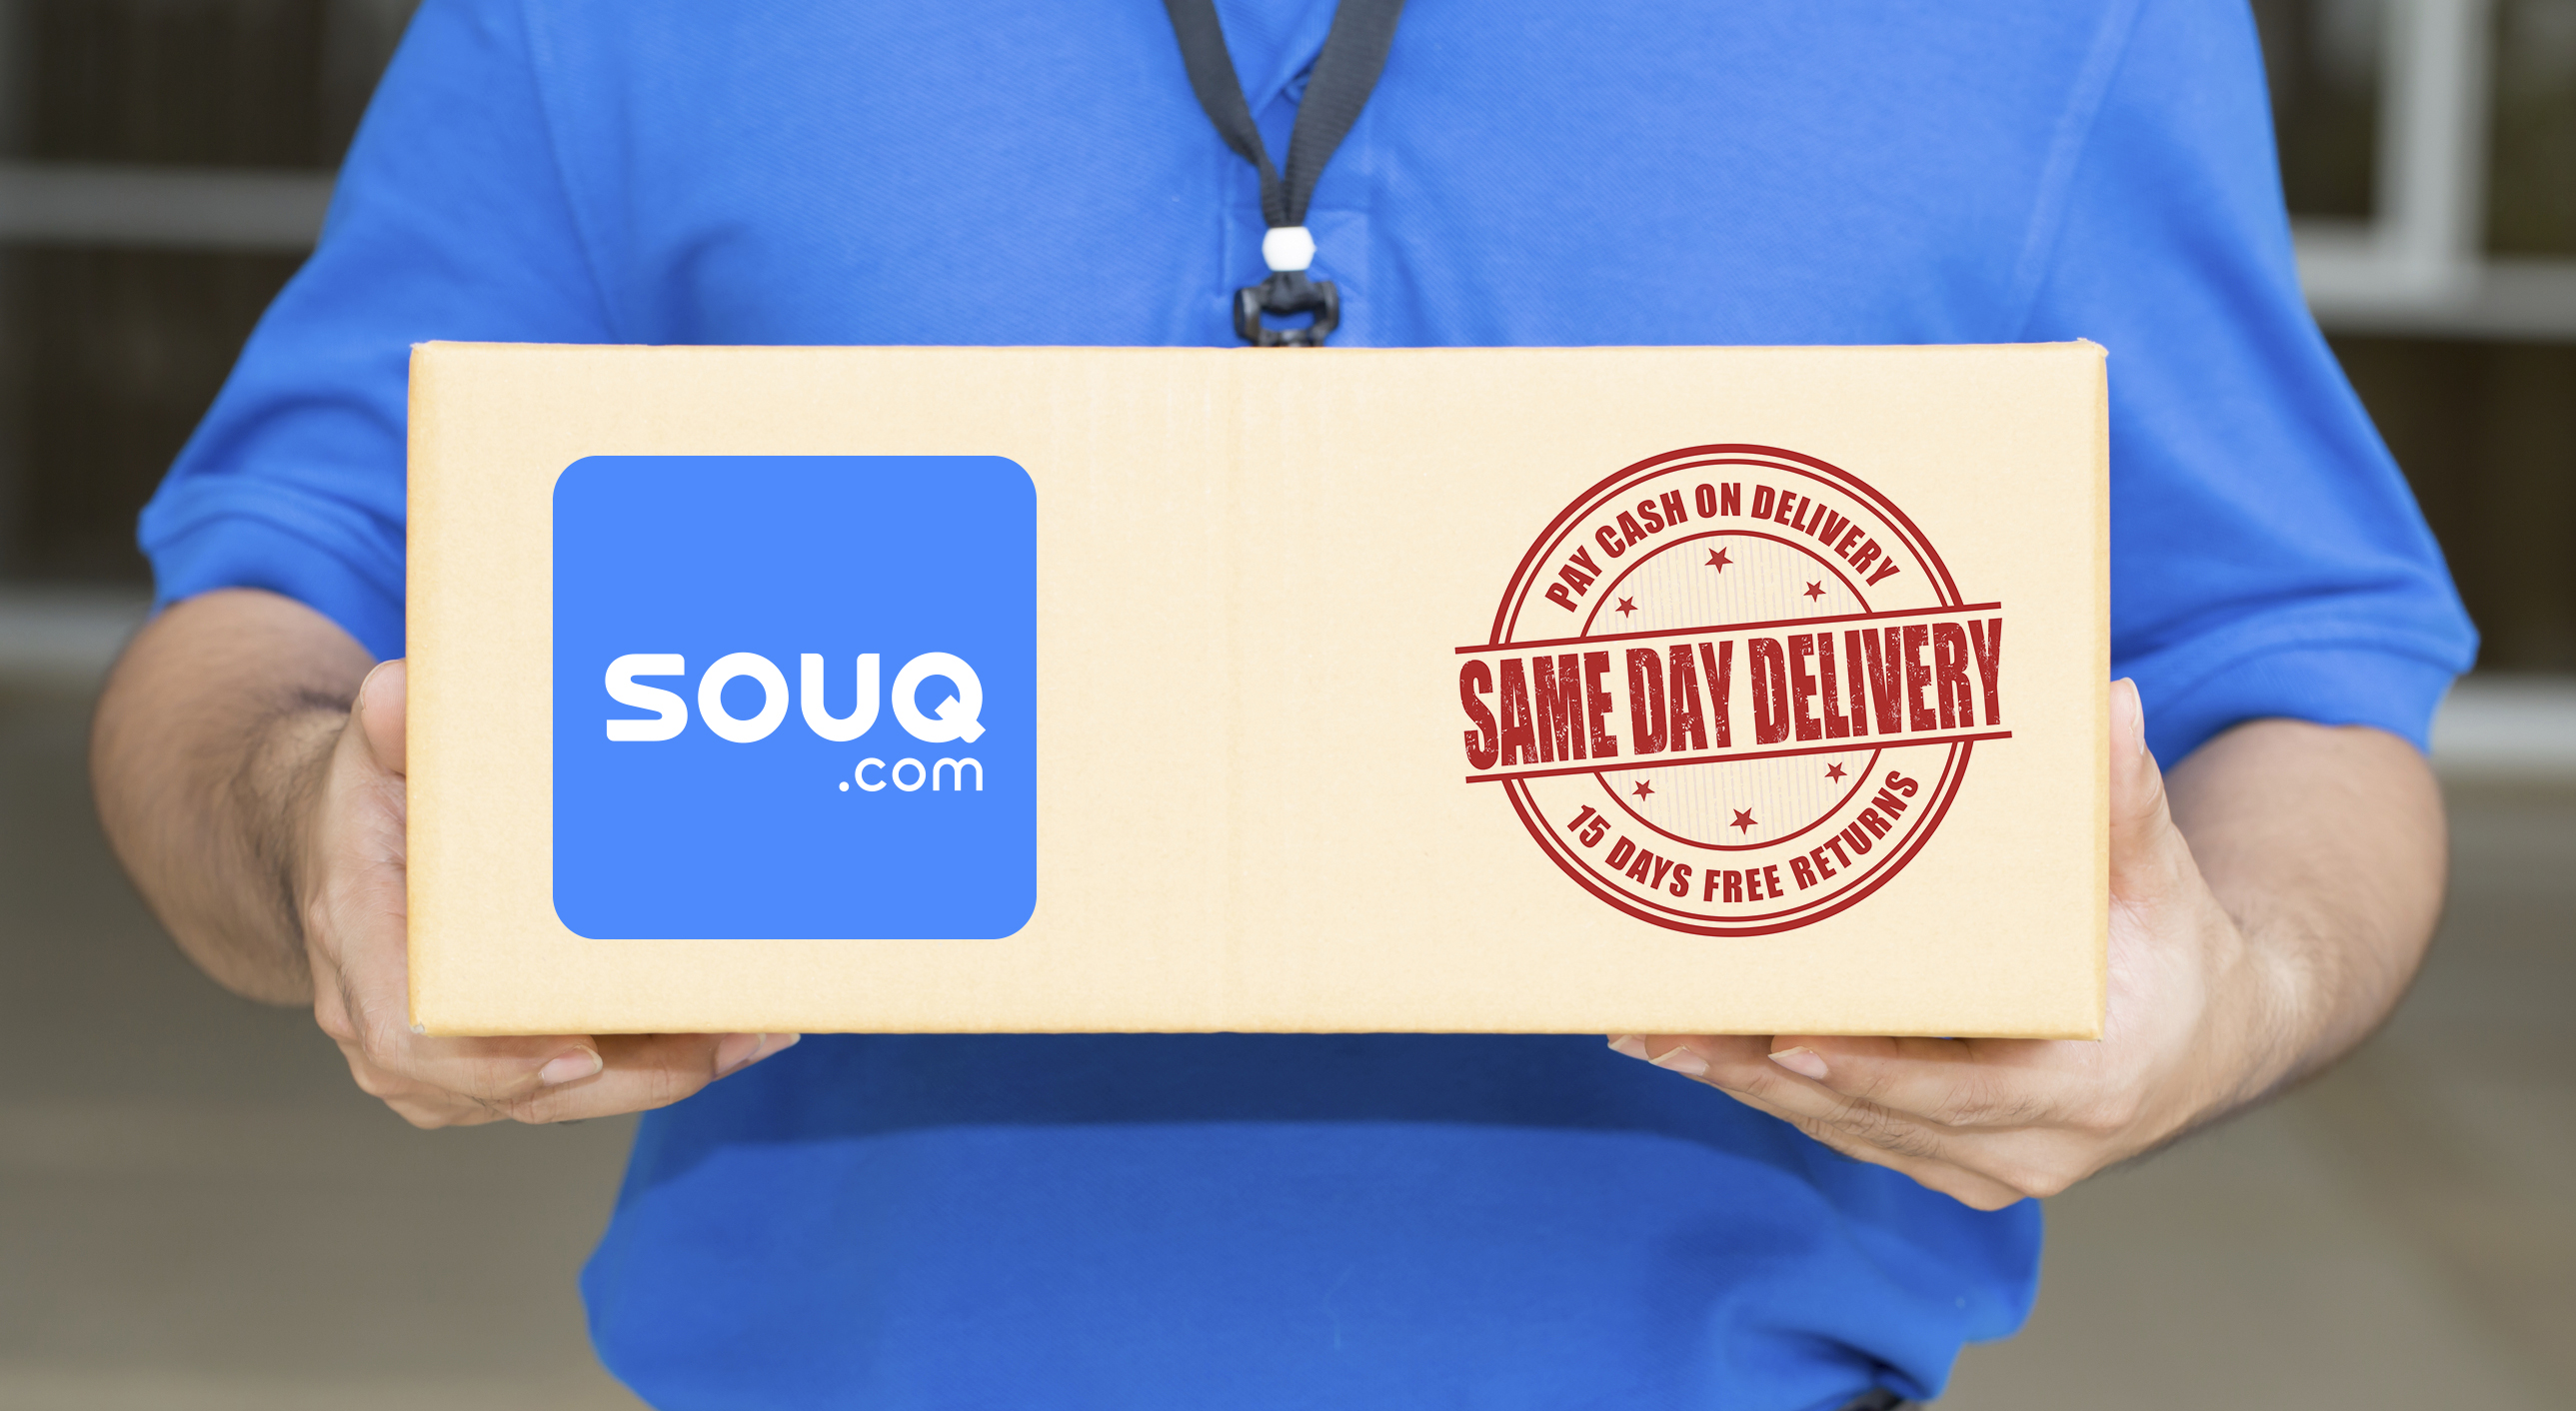 Souq.com announces same-day delivery service